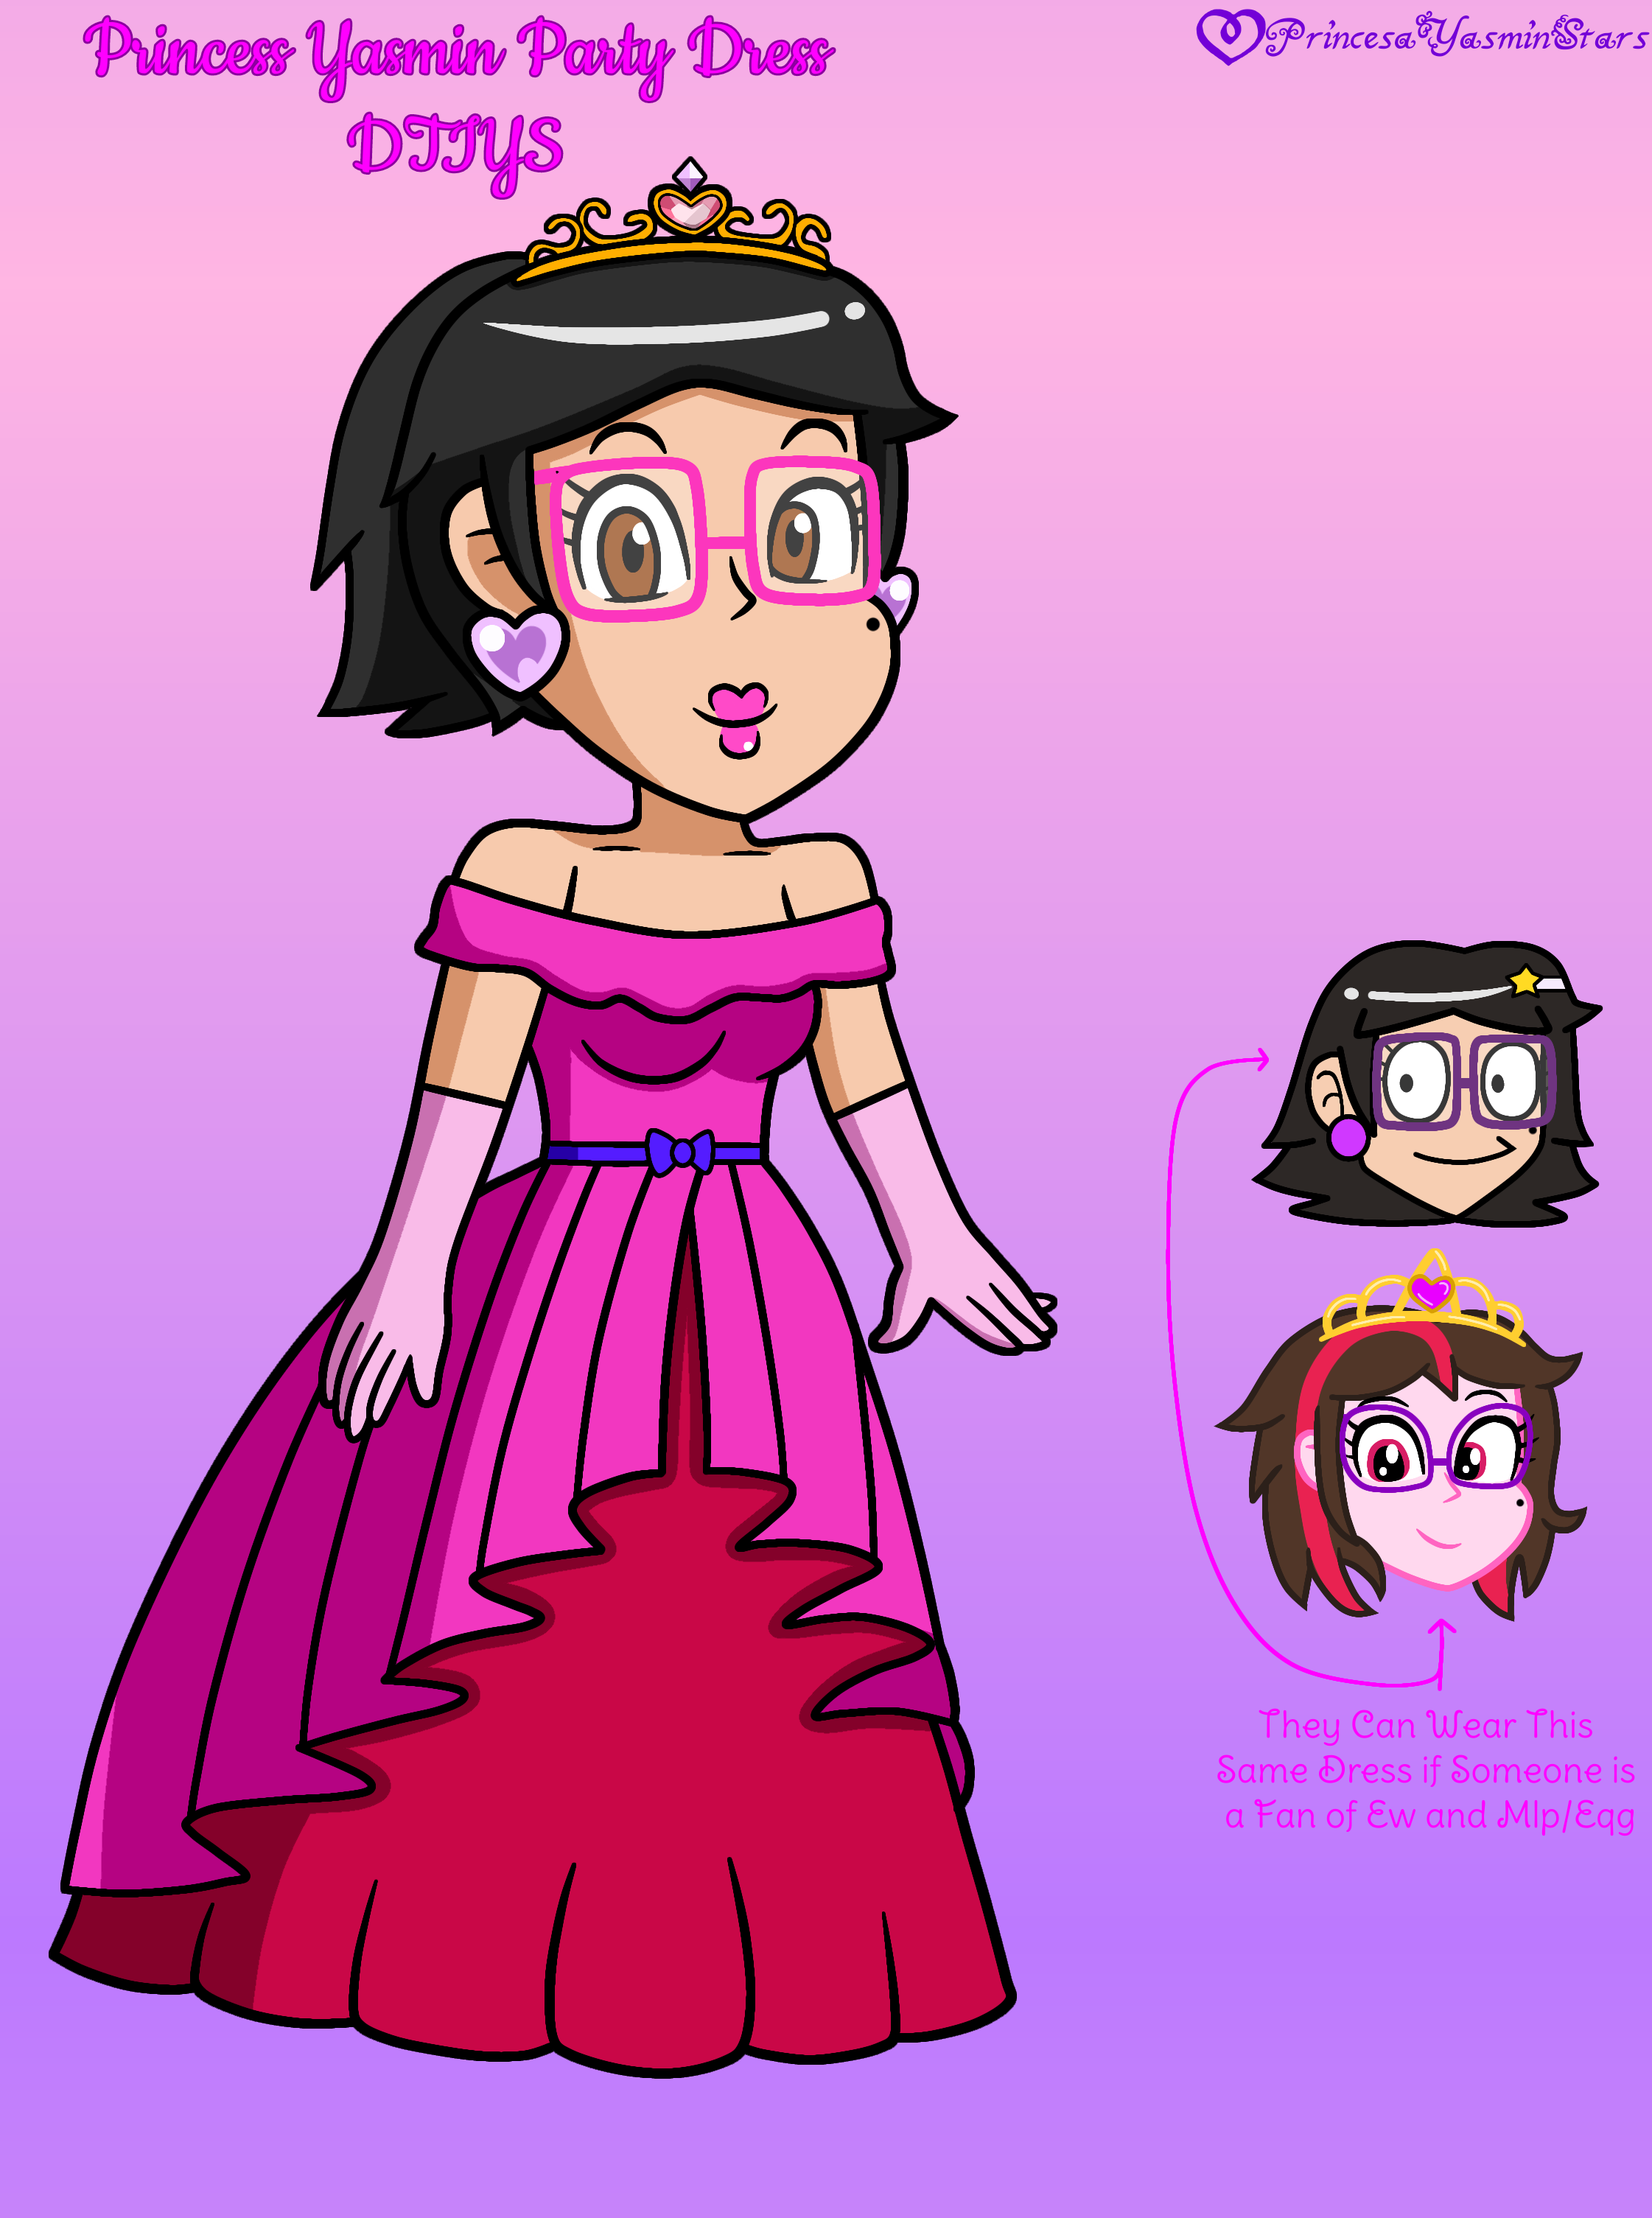 Princess Yasmin Party Dress by PrincesayasminStars on DeviantArt